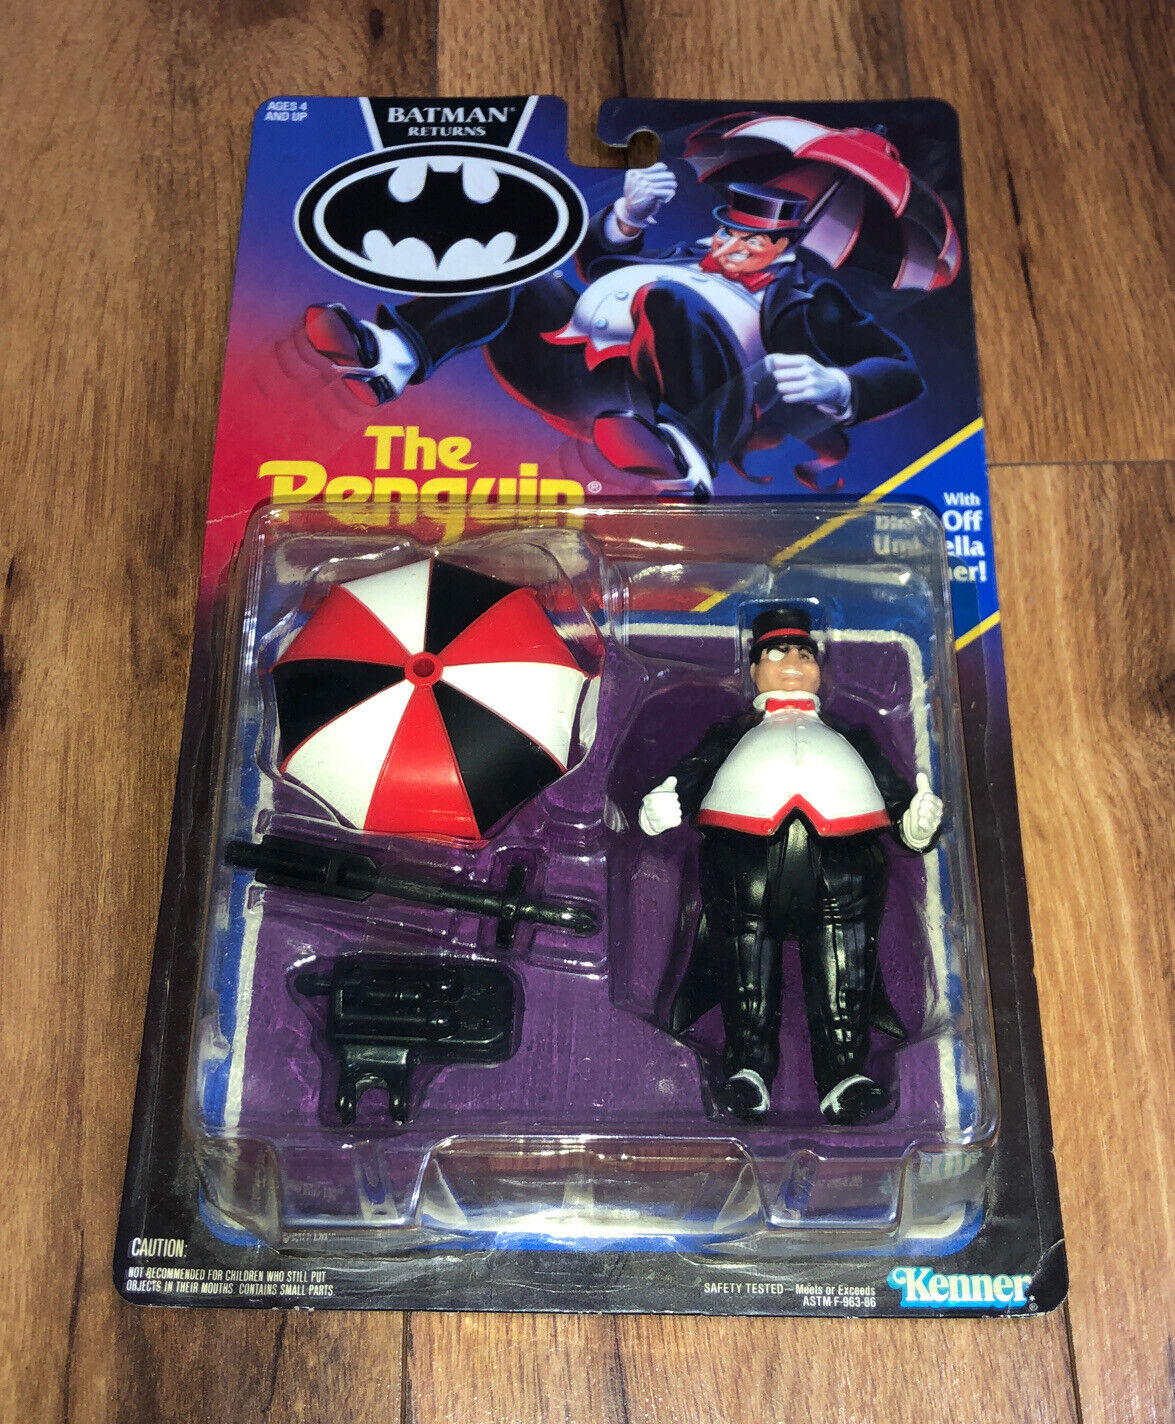 1991 Kenner New Batman Returns The Penguin Figure Blast-Off Umbrella Launcher